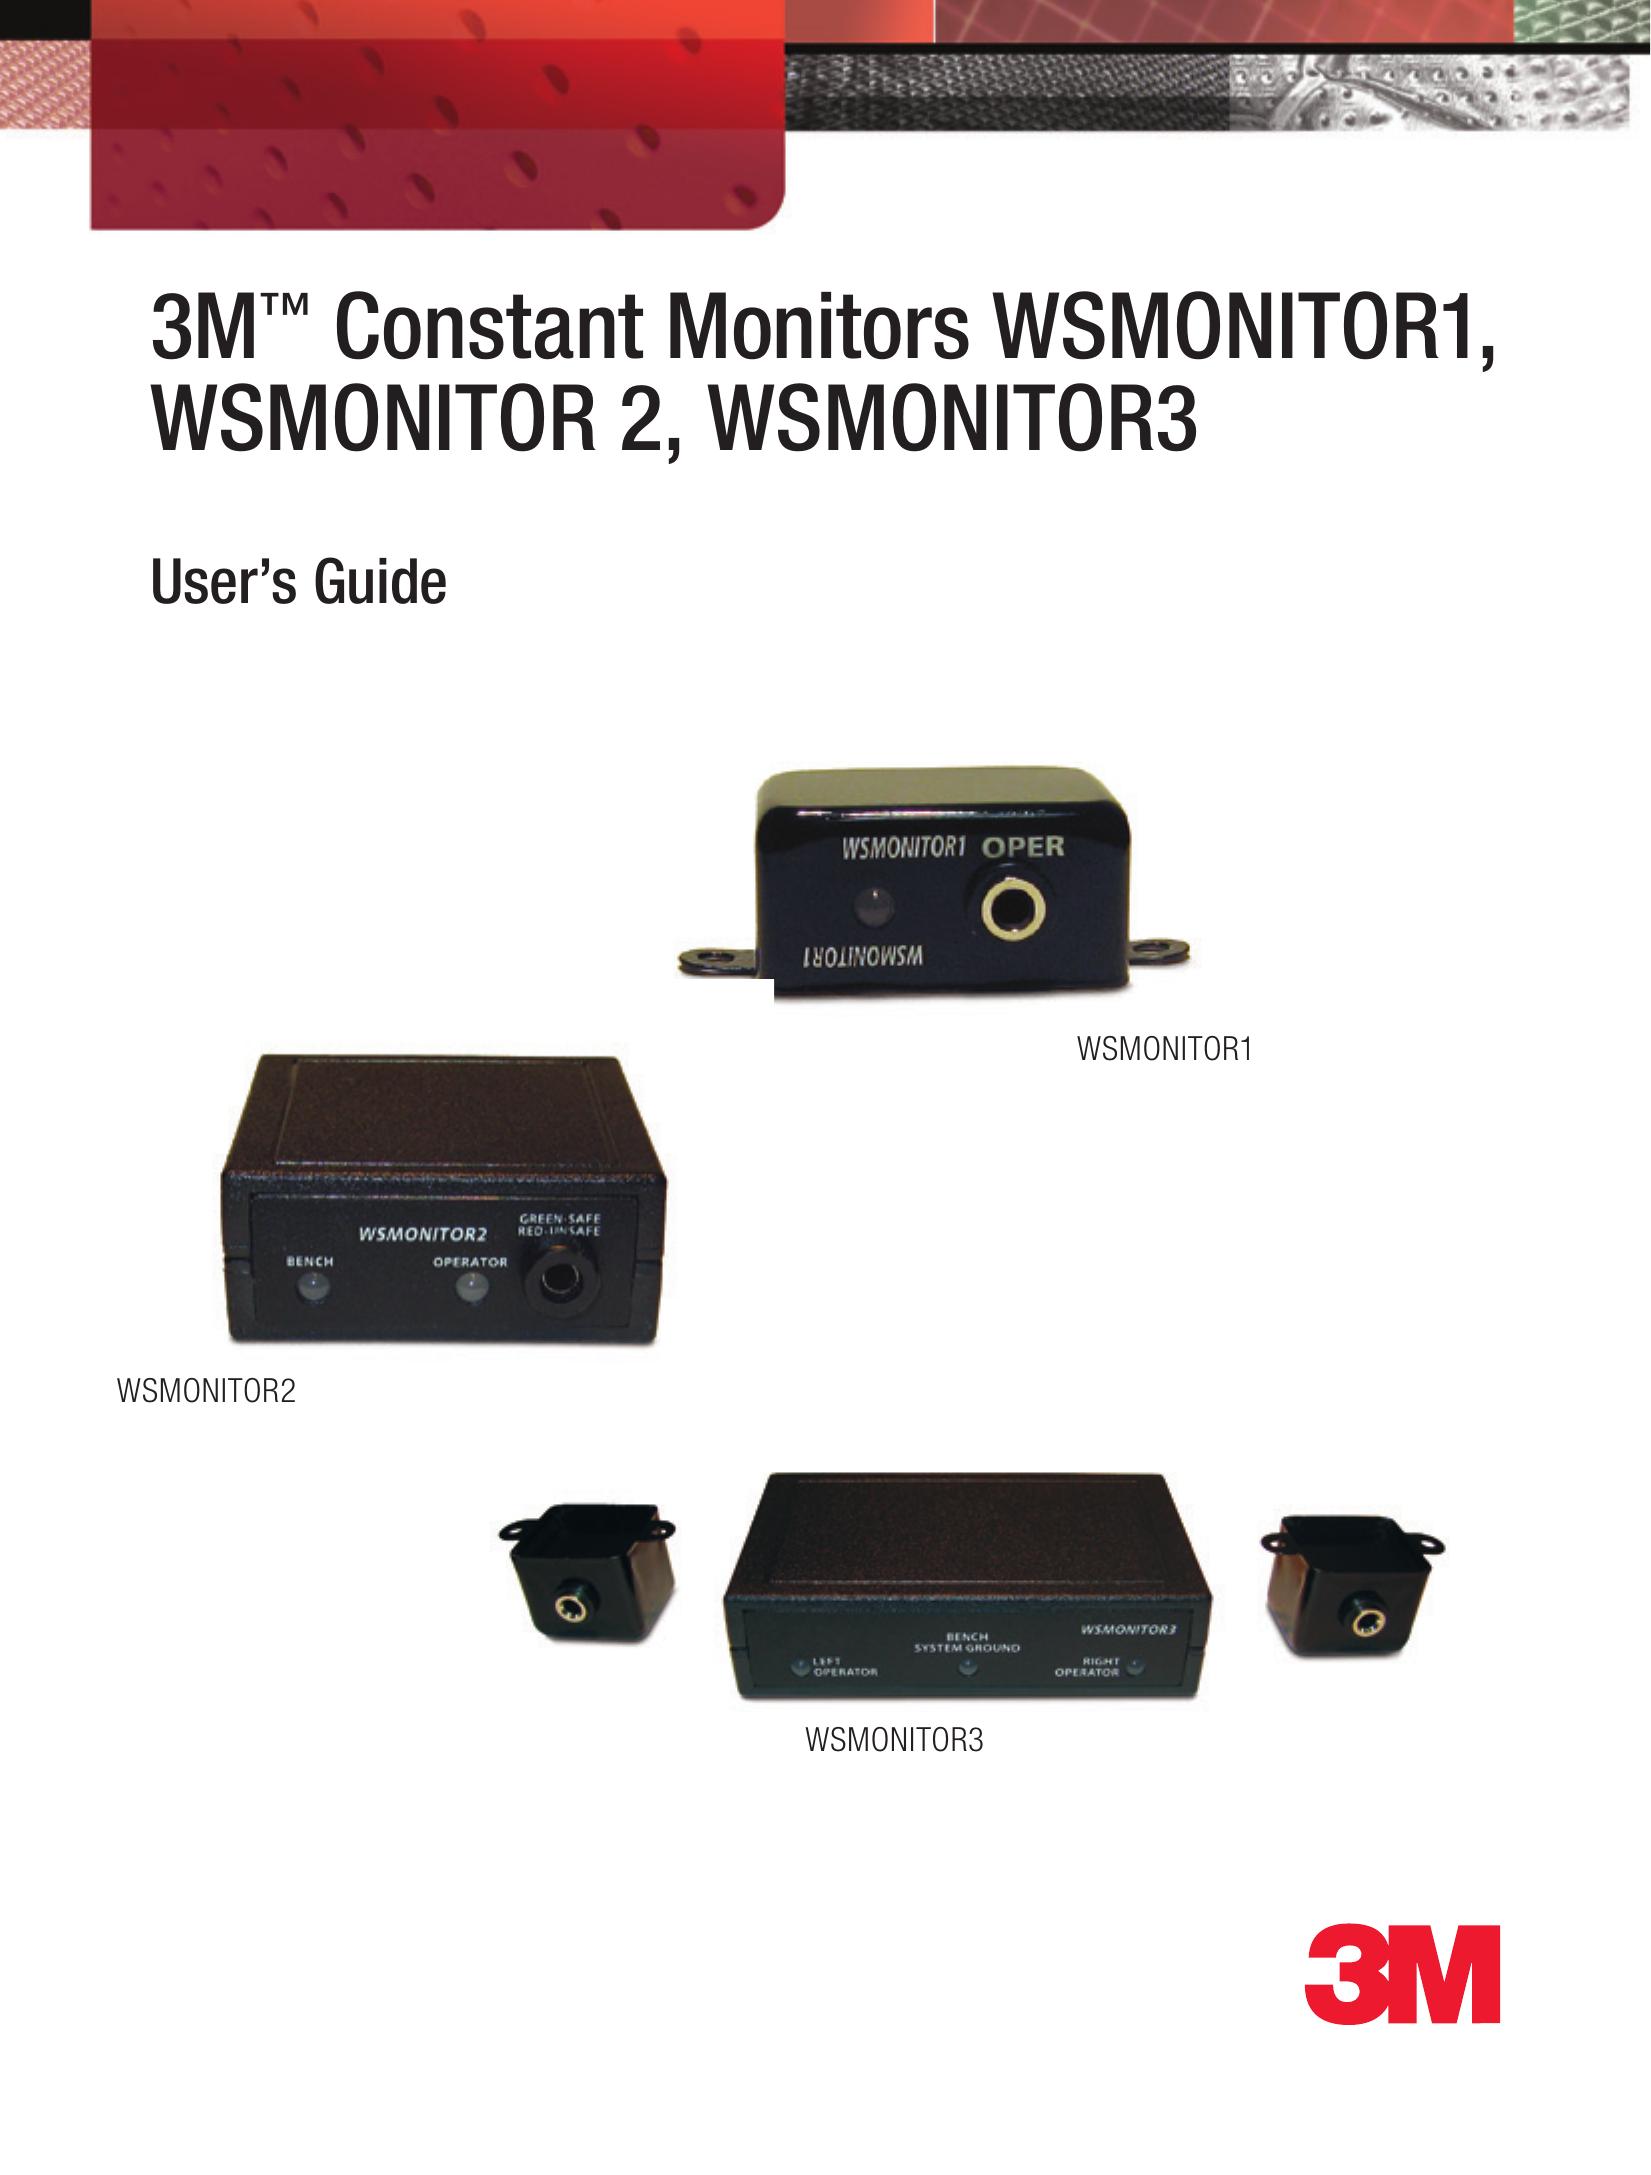 3M WSMONITOR 2 Marine Instruments User Manual